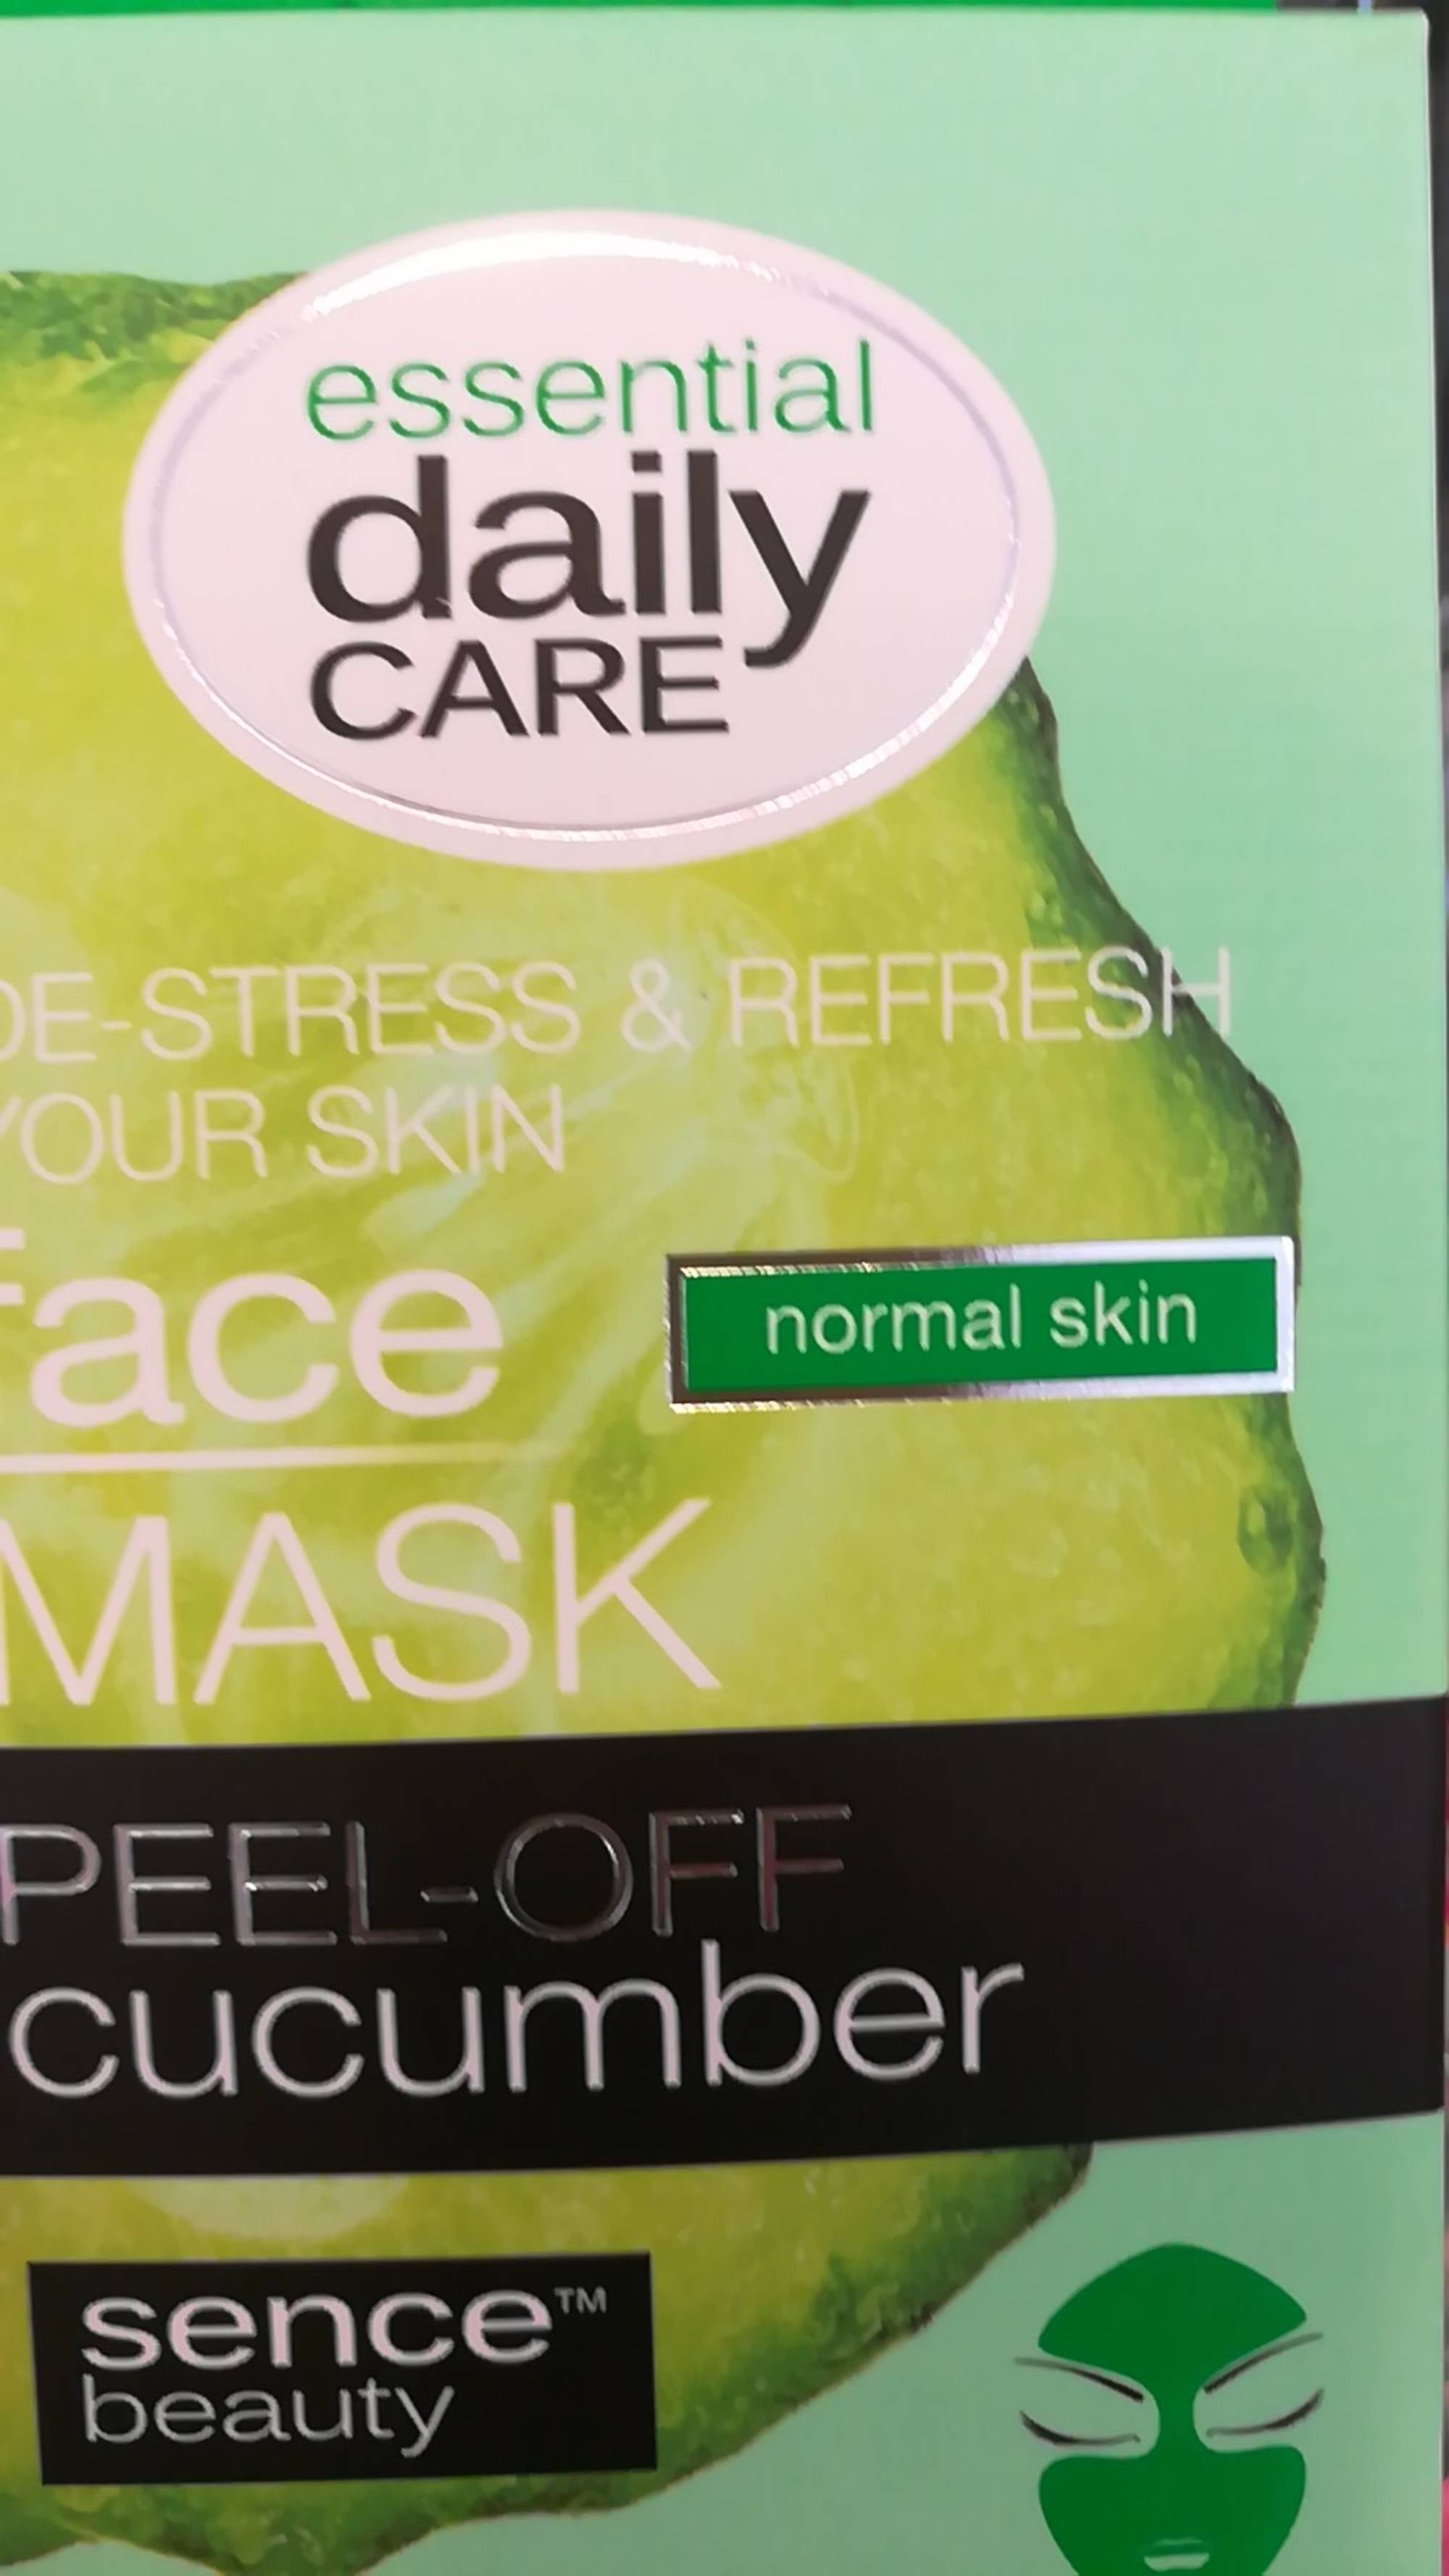 SENCE BEAUTY - Peel-off cucumber - Face mask